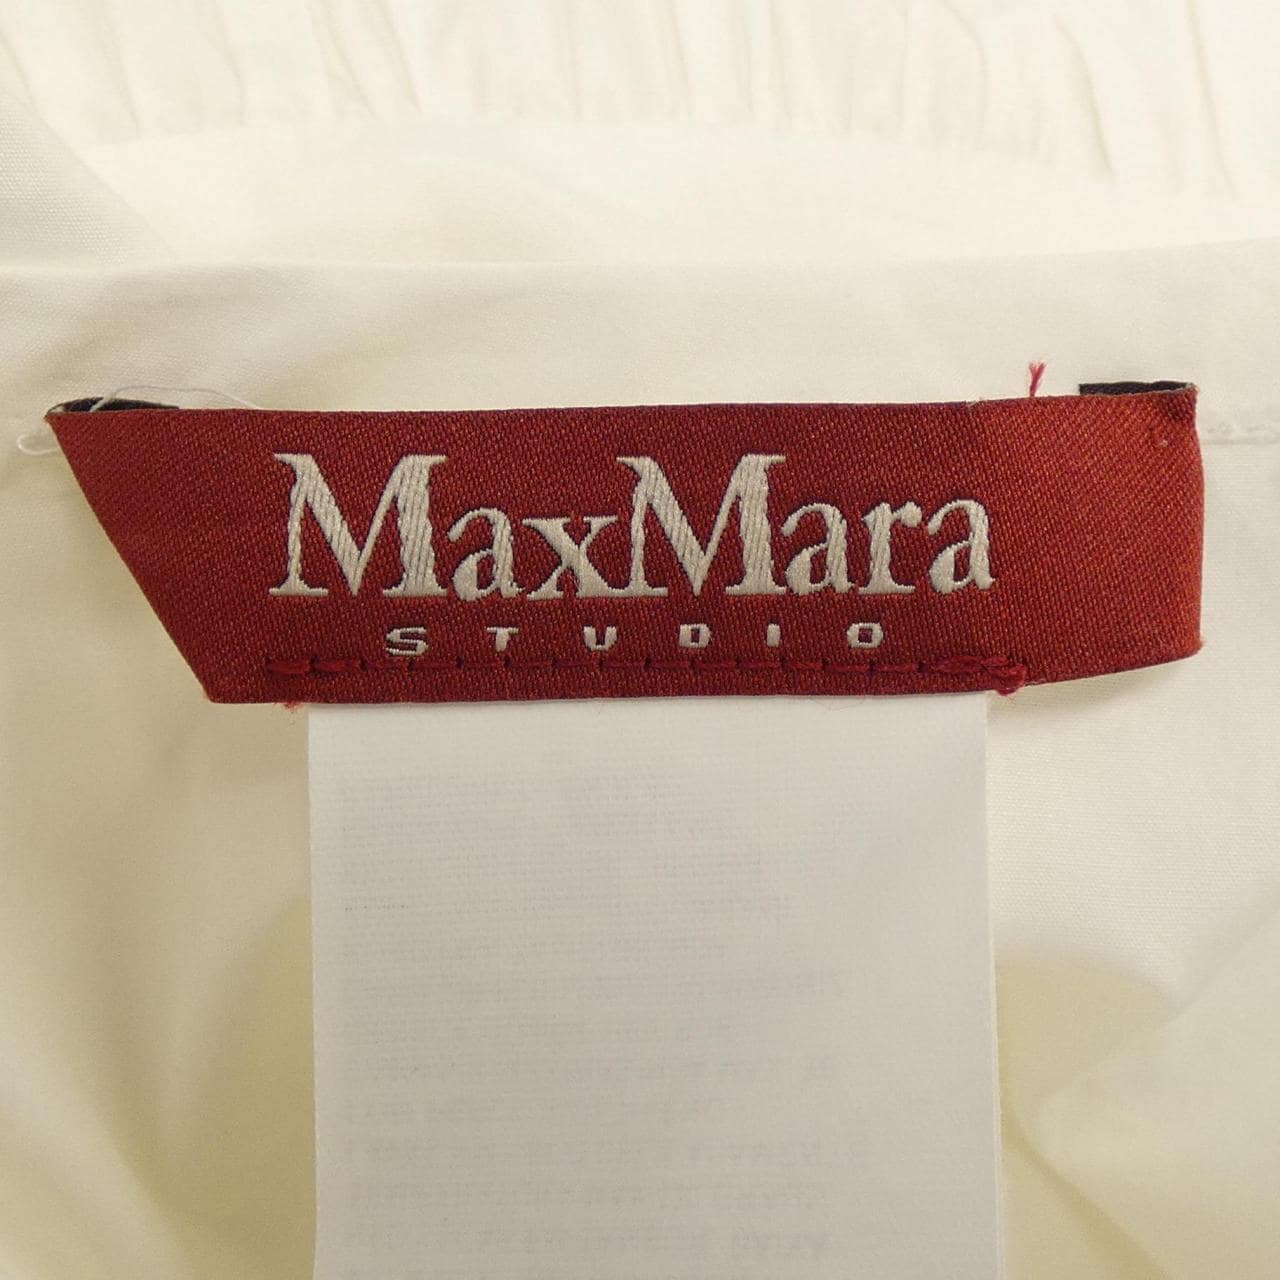 Max Mara STUDIO Mara STUDIO One Piece